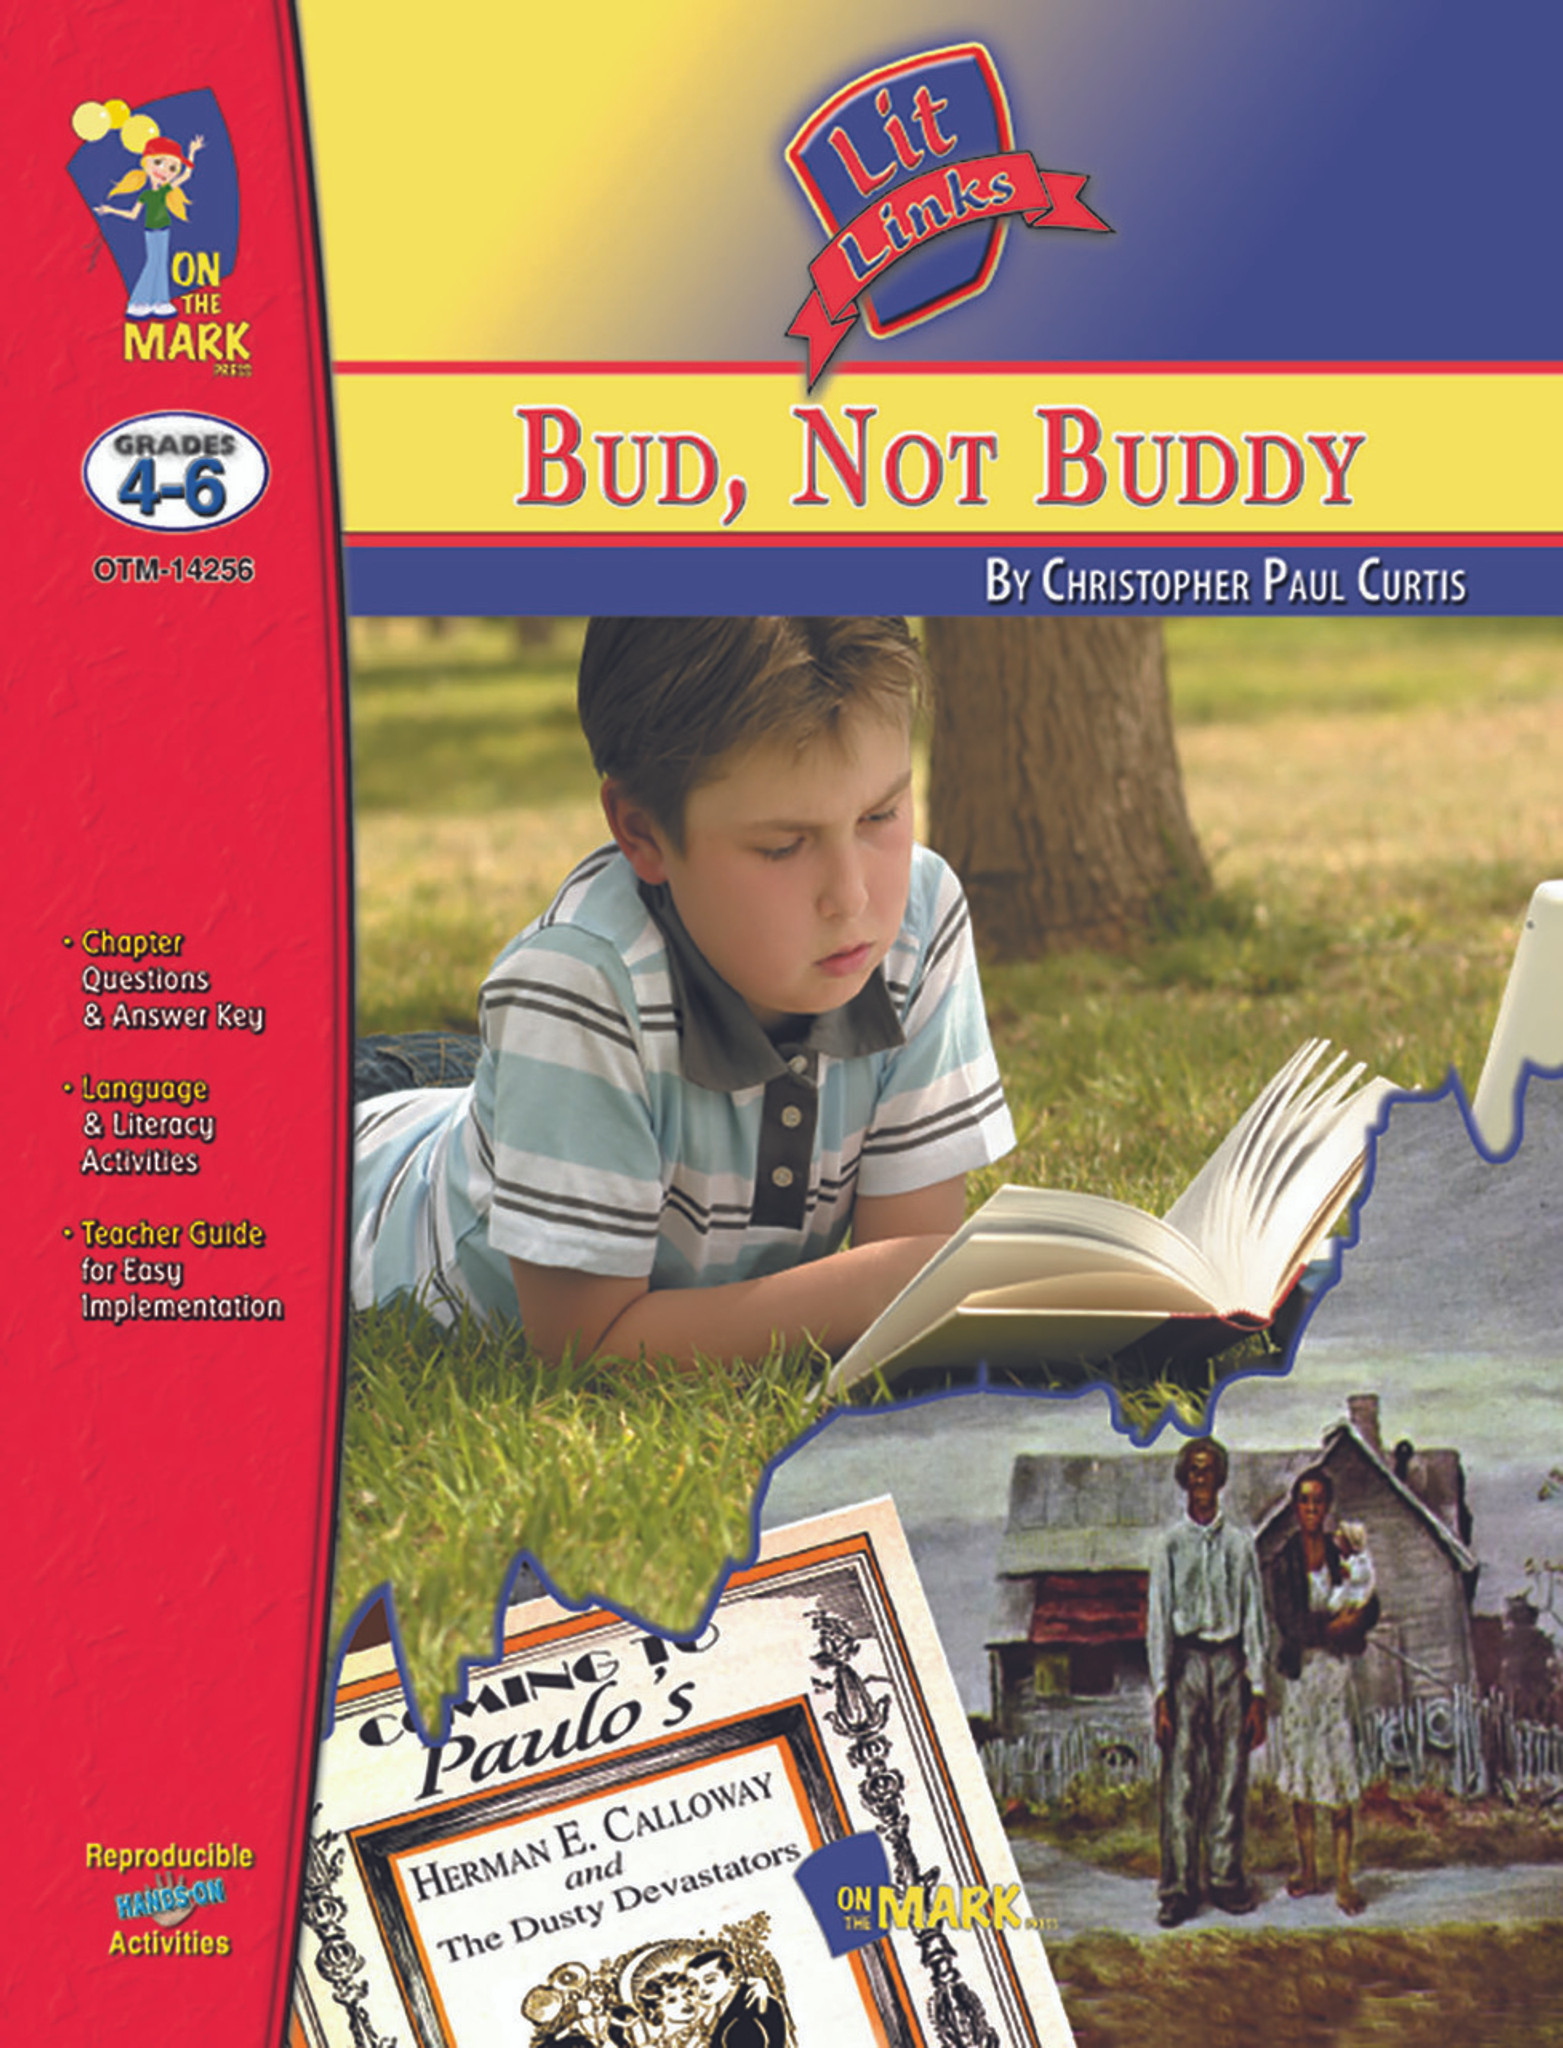 Bud Not Buddy: Lit Links Literature Guide For Teachers